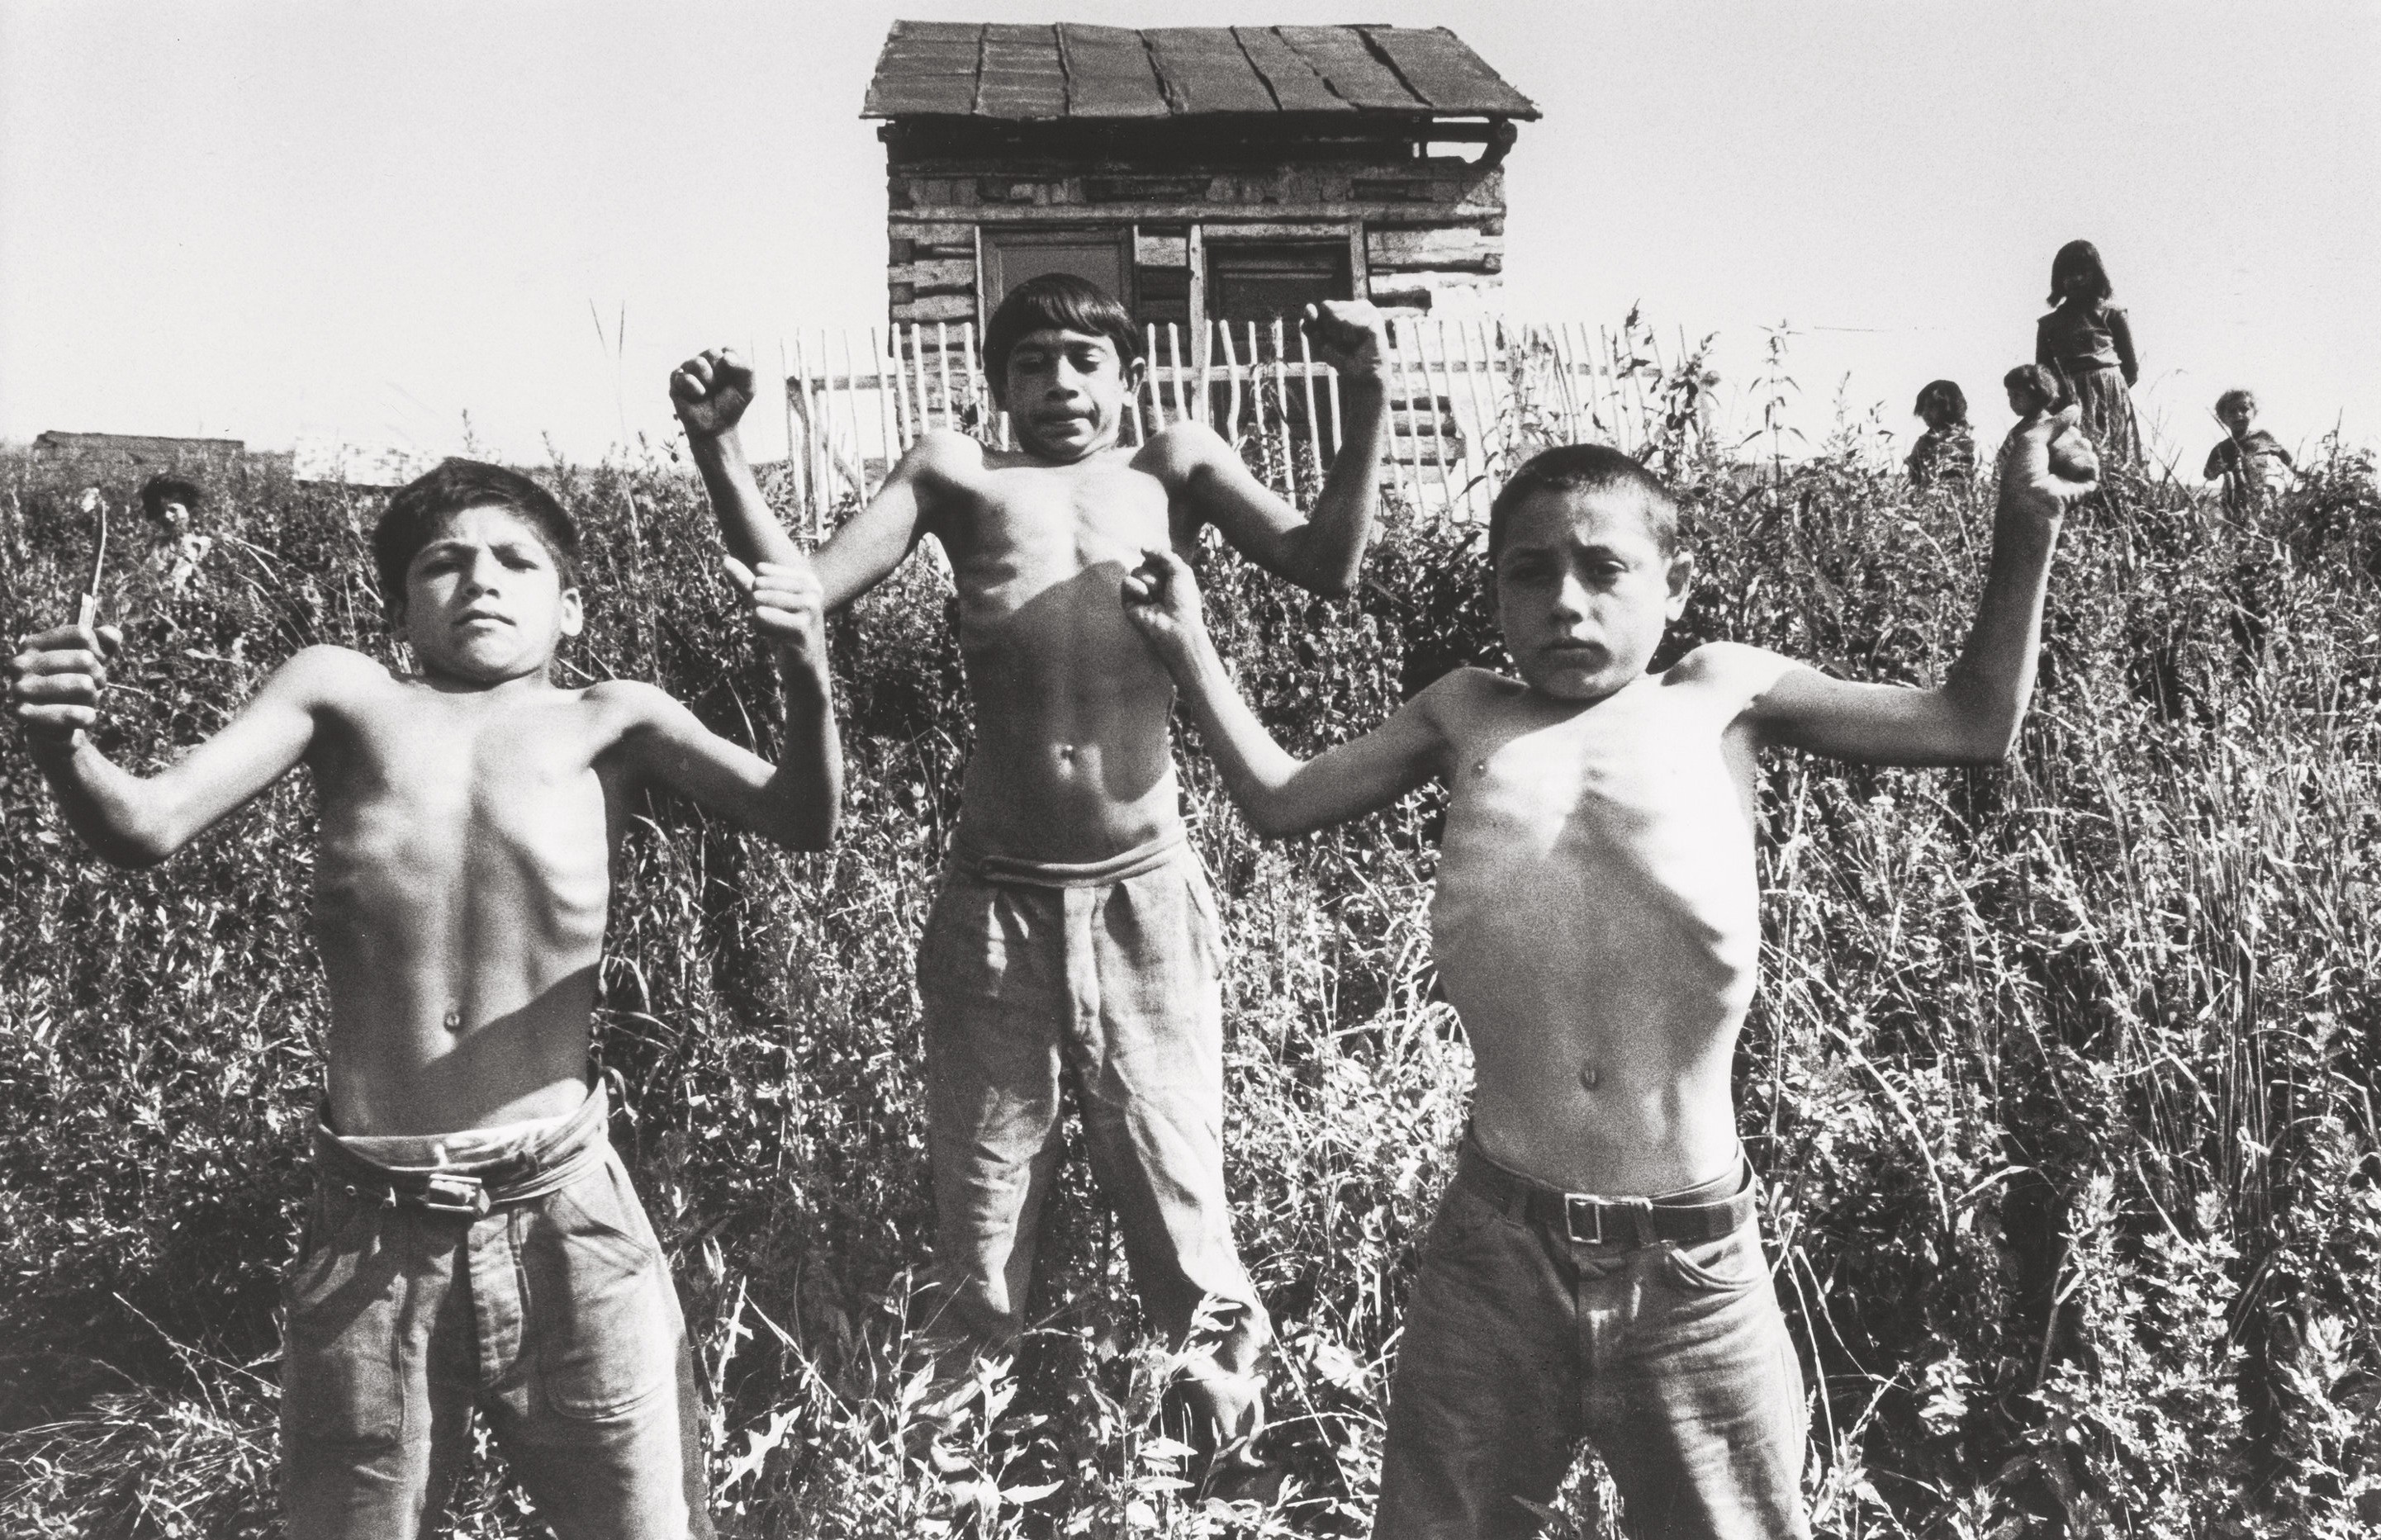 Мальчики хвастают мускулатурой. Жехра, 1967 год. Фотограф Йозеф Куделка